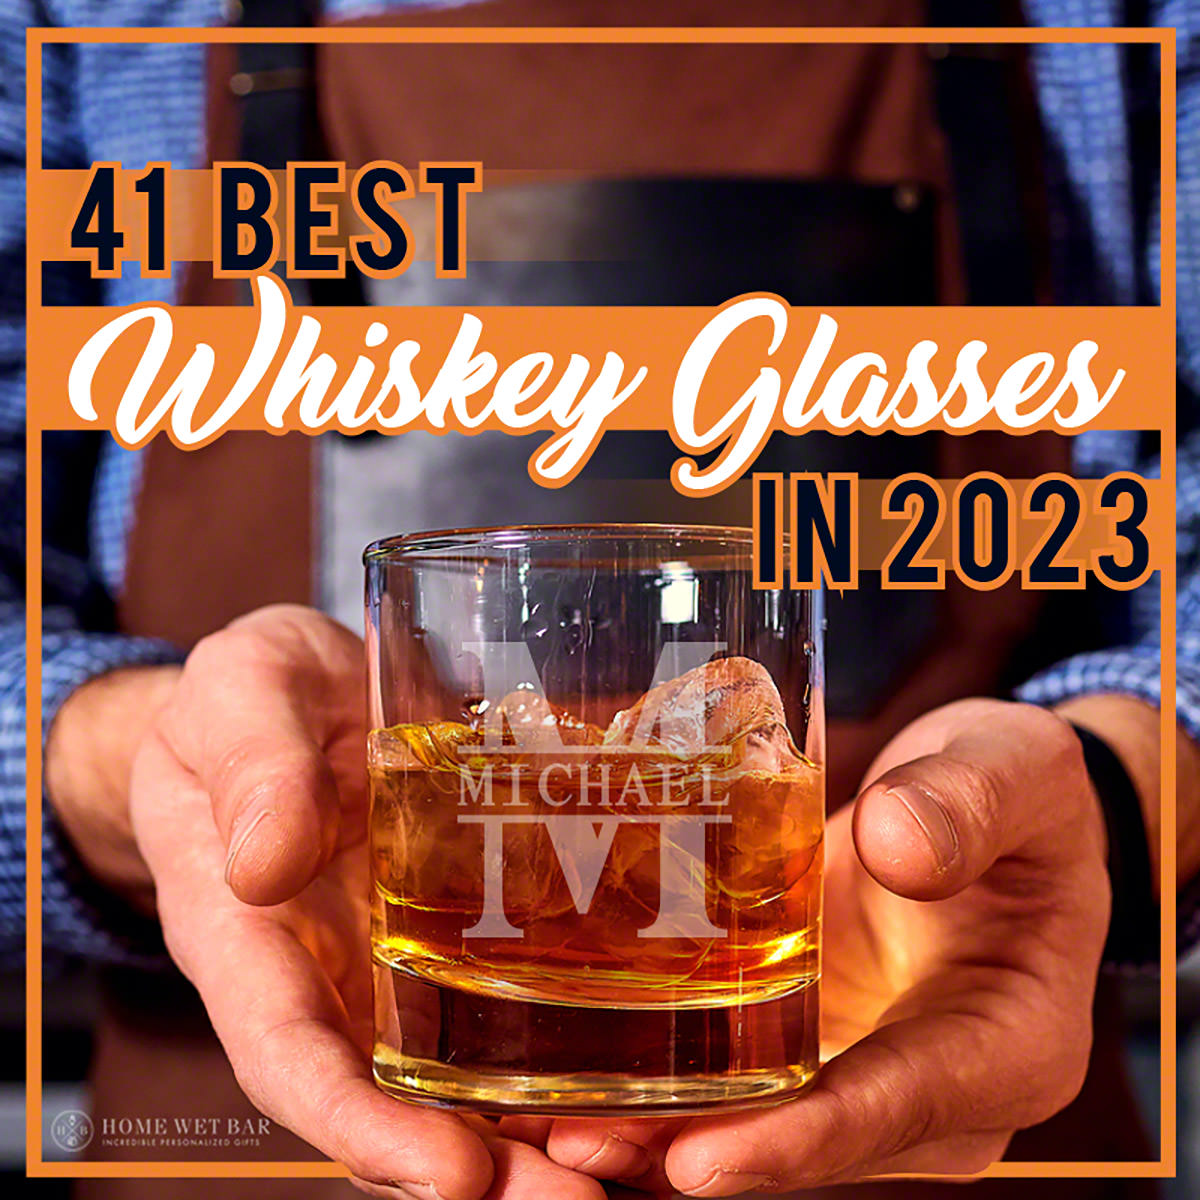 https://www.homewetbar.com/blog/wp-content/uploads/2019/06/41-Best-Whiskey-Glasses-in-2023.jpg